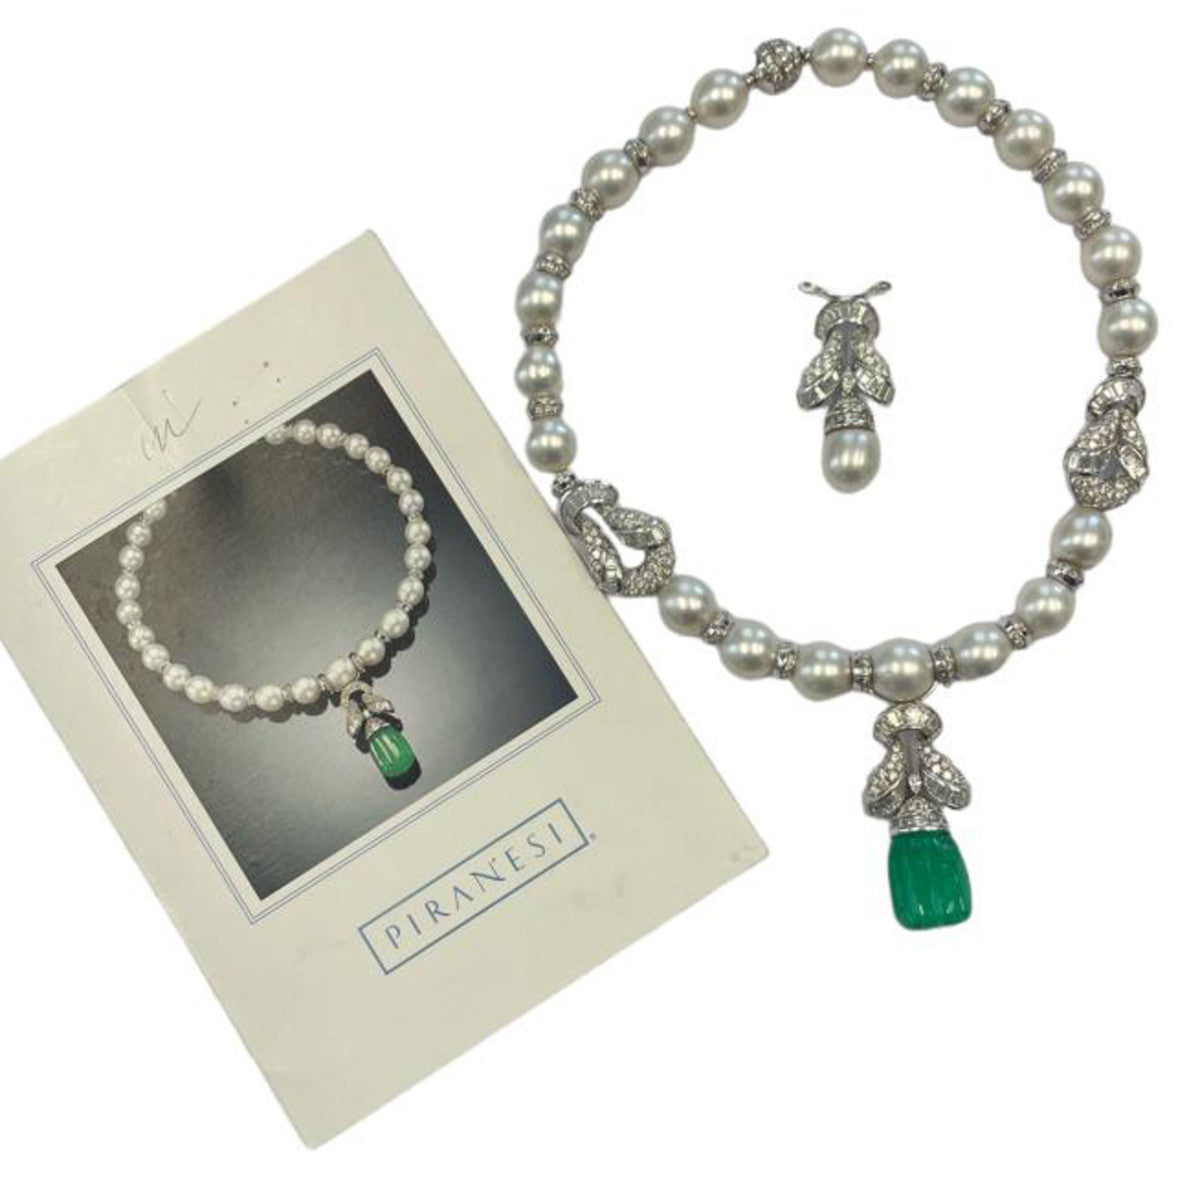 Piranesi Italy 1980s Platinum Emerald, Diamond & Cultured Pearl Necklace with jewelry box